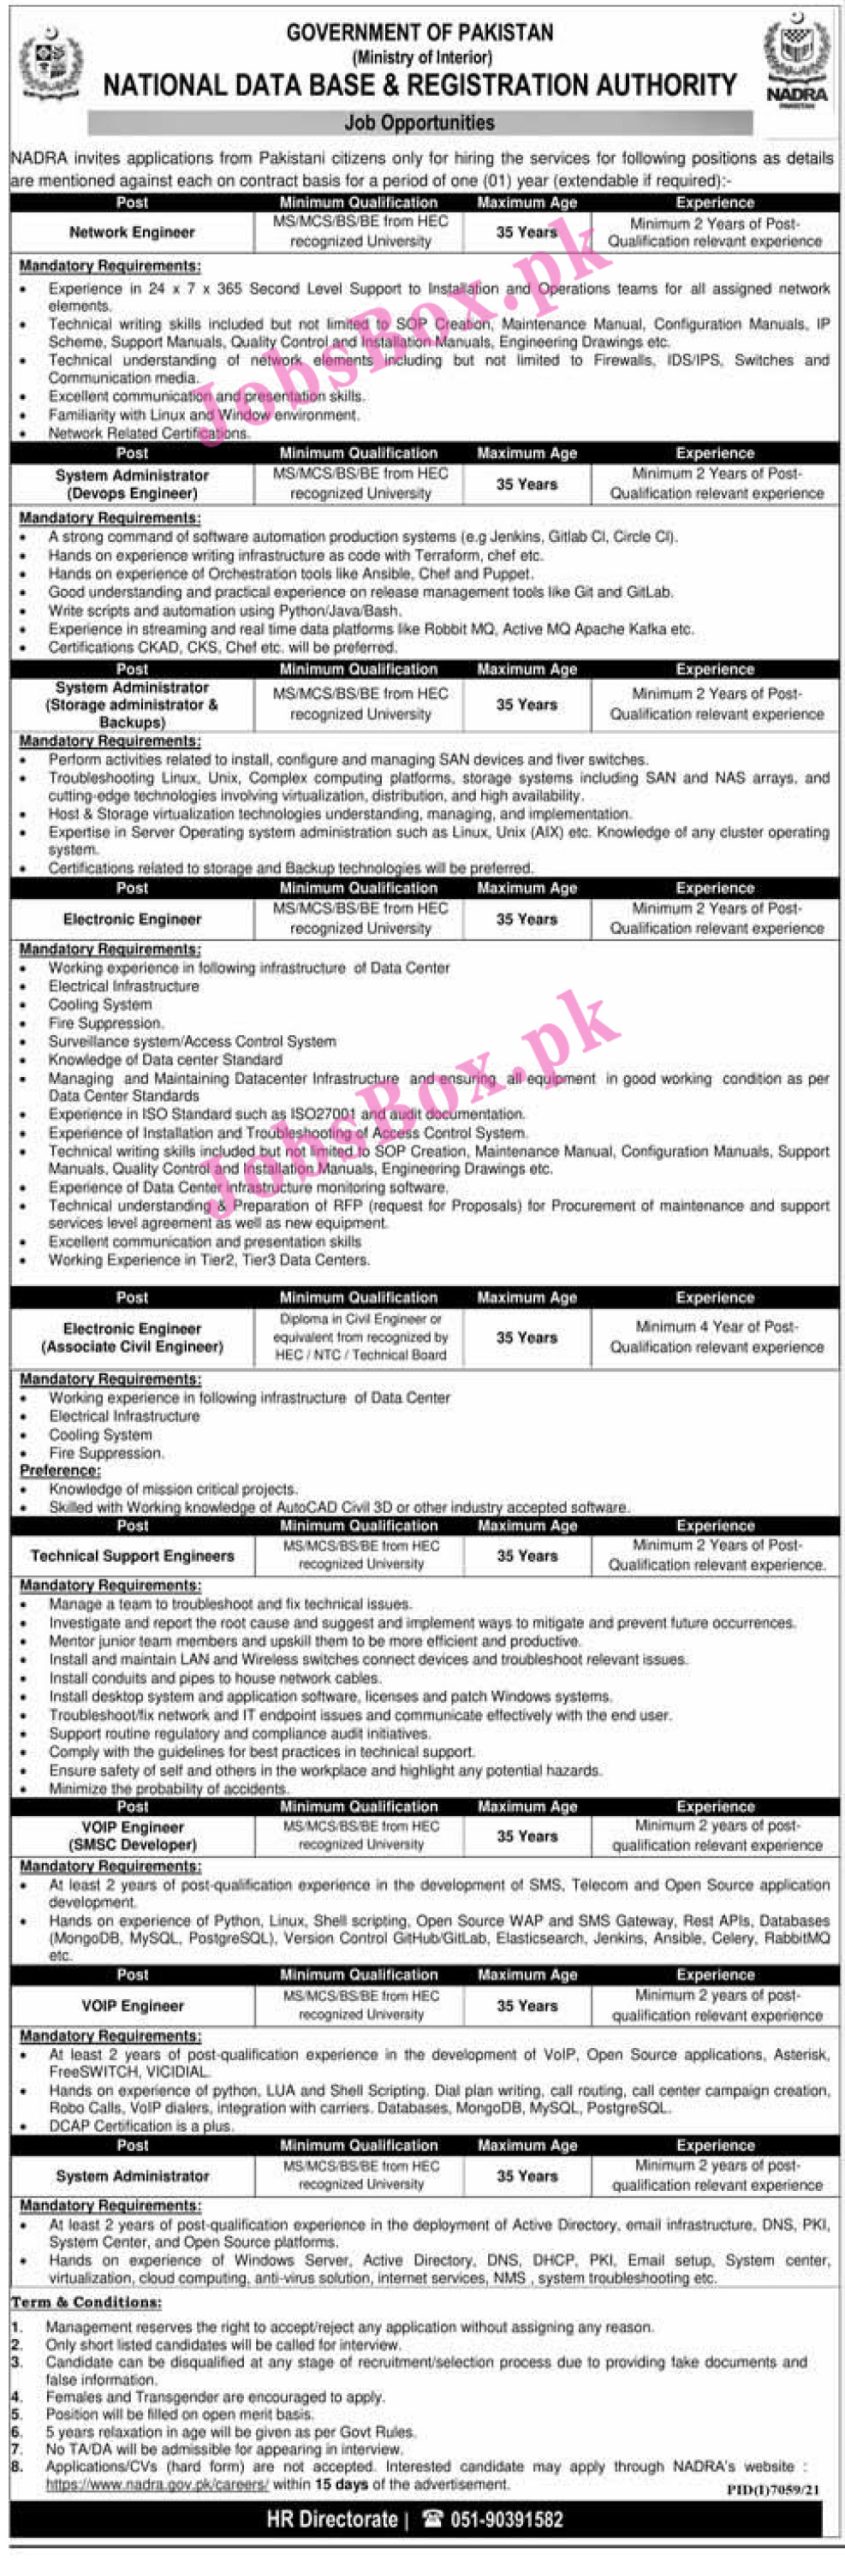 NADRA Jobs 2022 Ministry of Interior – Apply at www.nadra.gov.pk